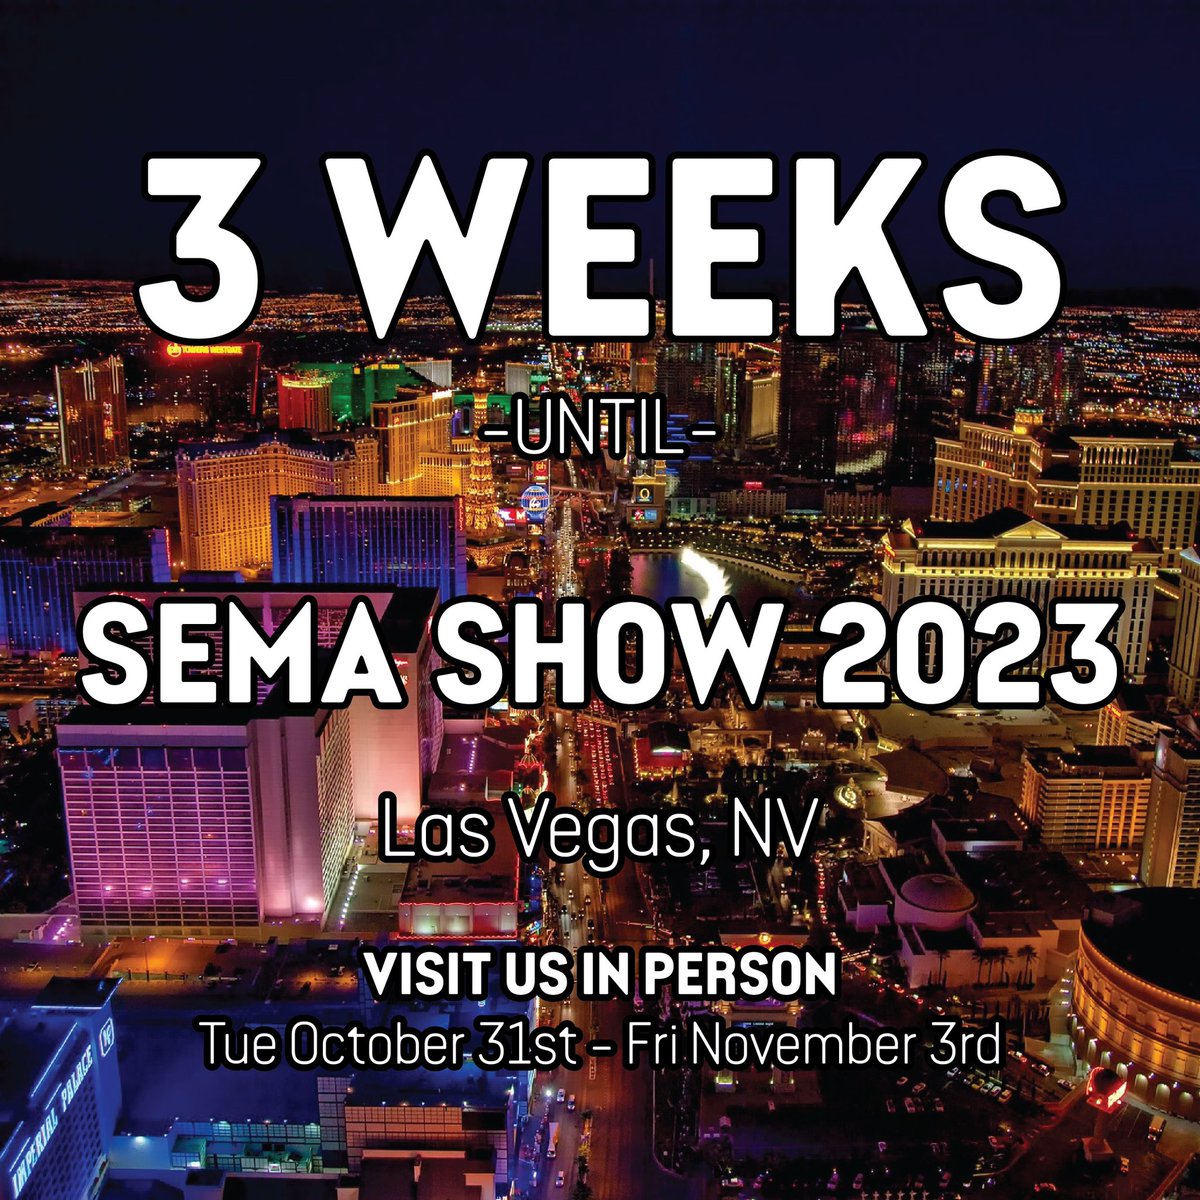 Next stop: the SEMA Show! 👍

#SEMA #SEMAShow #SEMA2023 #Overland #Overlanding #OverlandVehicles #BuiltForOffRoad #LasVegas #Nevada #TradeShow